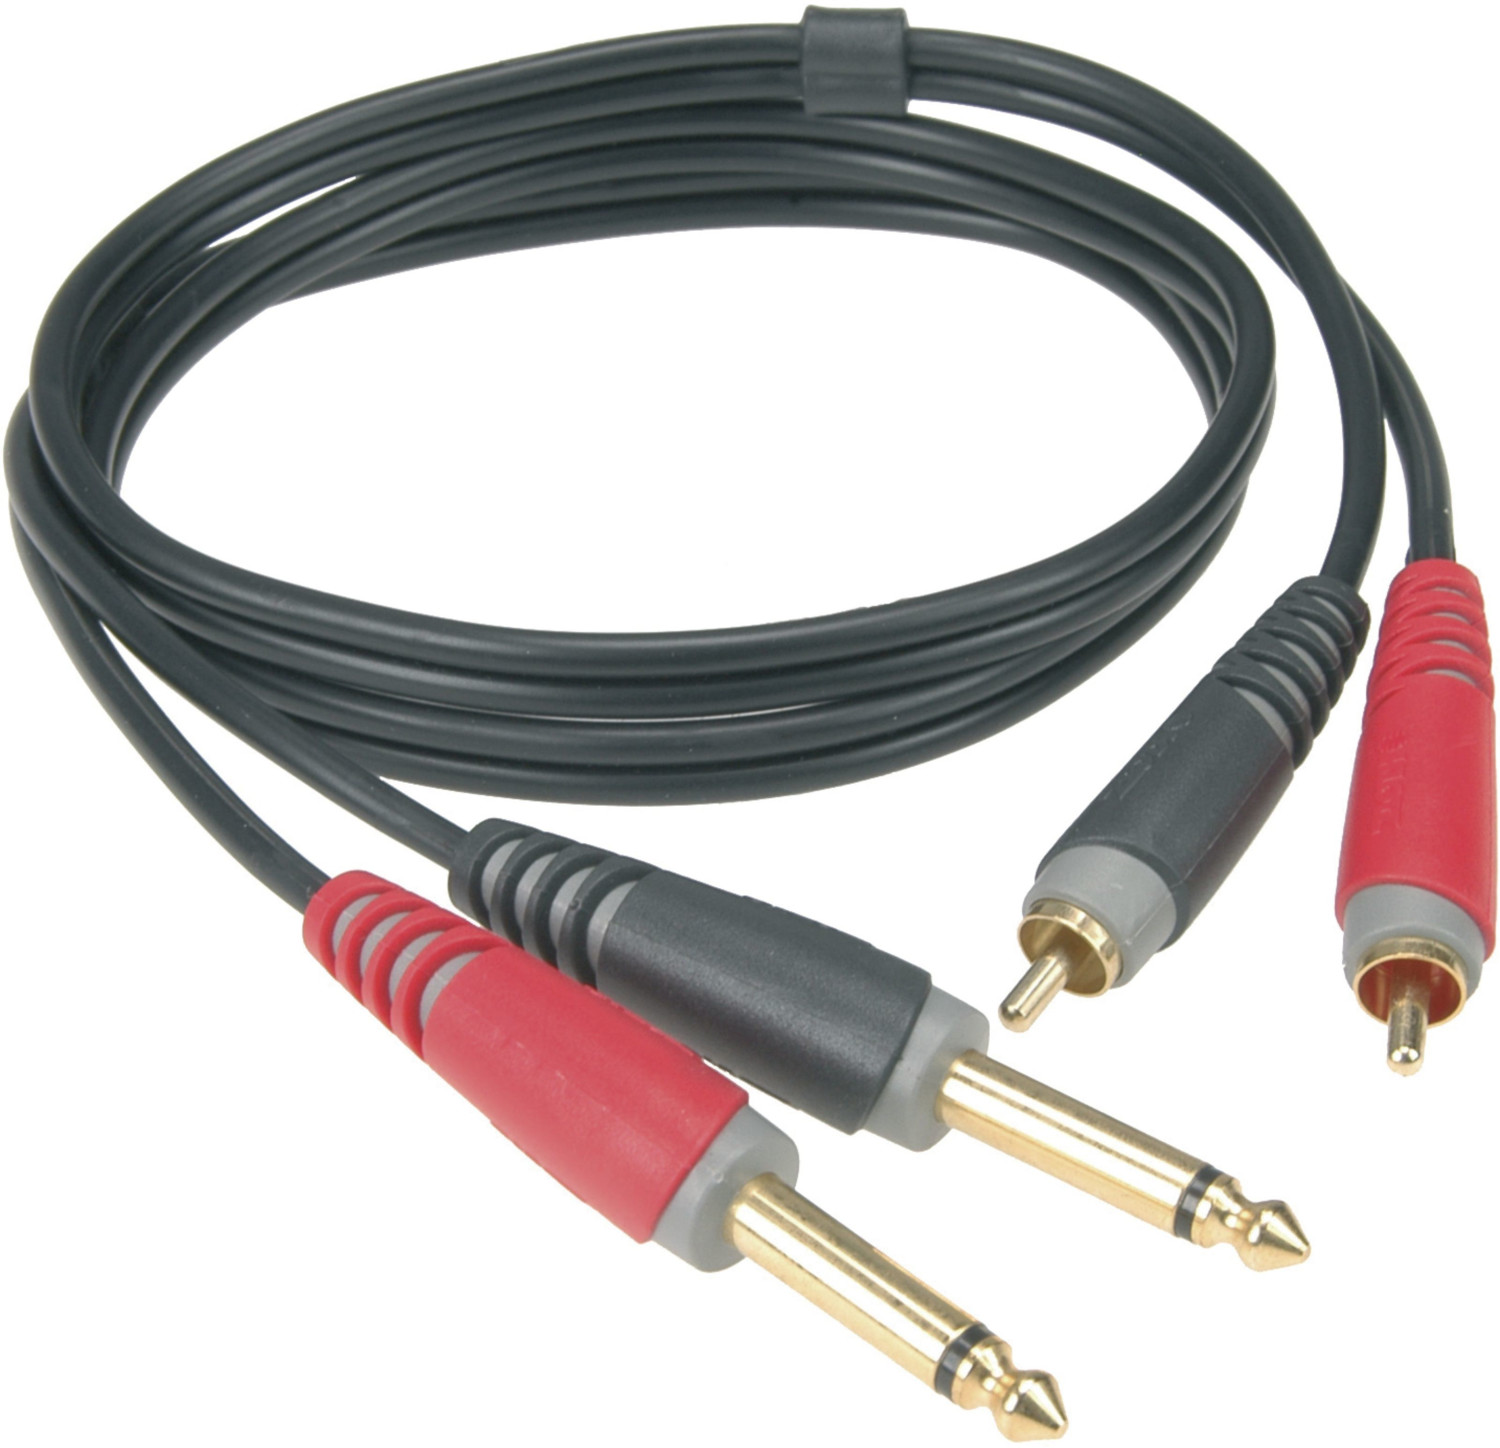 Photos - Cable (video, audio, USB) Klotz a-i-s  AT-CJ0600 Cinch Klinkekabel 6m 